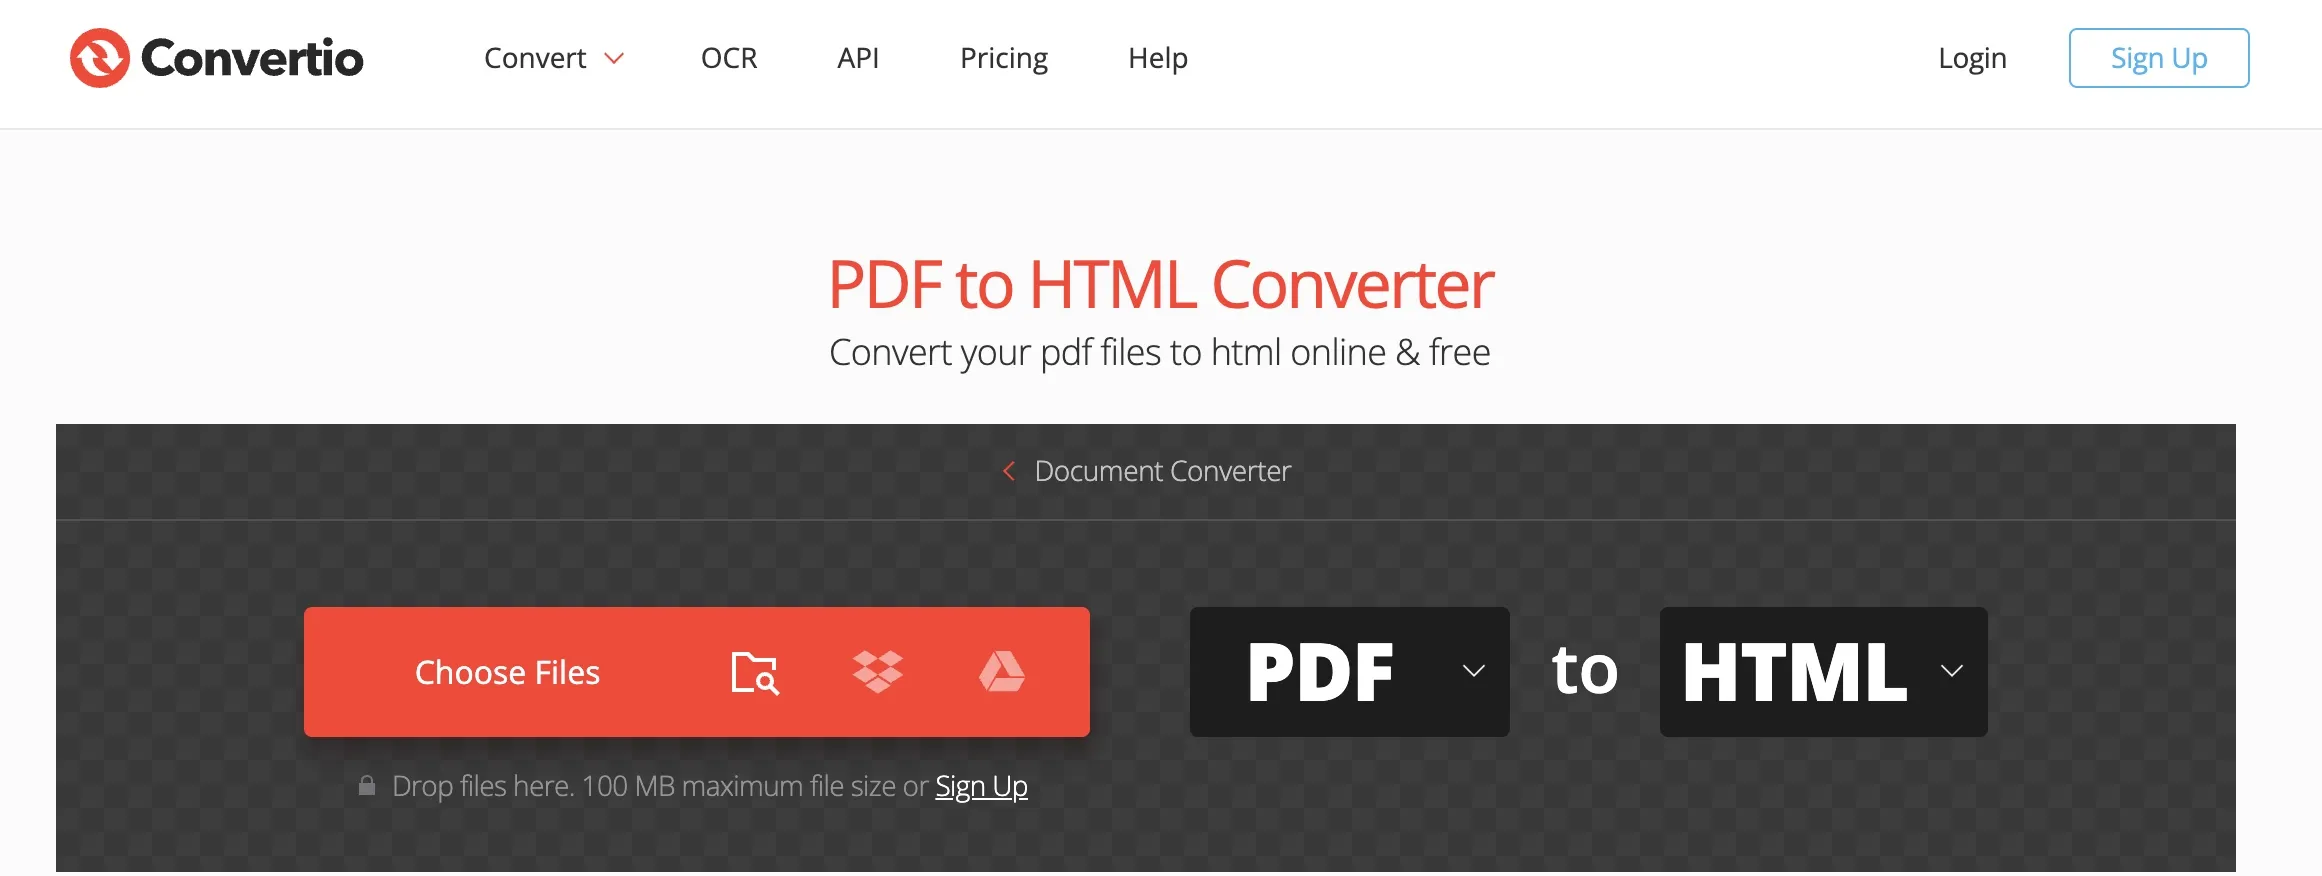 online pdf to html converter convertio